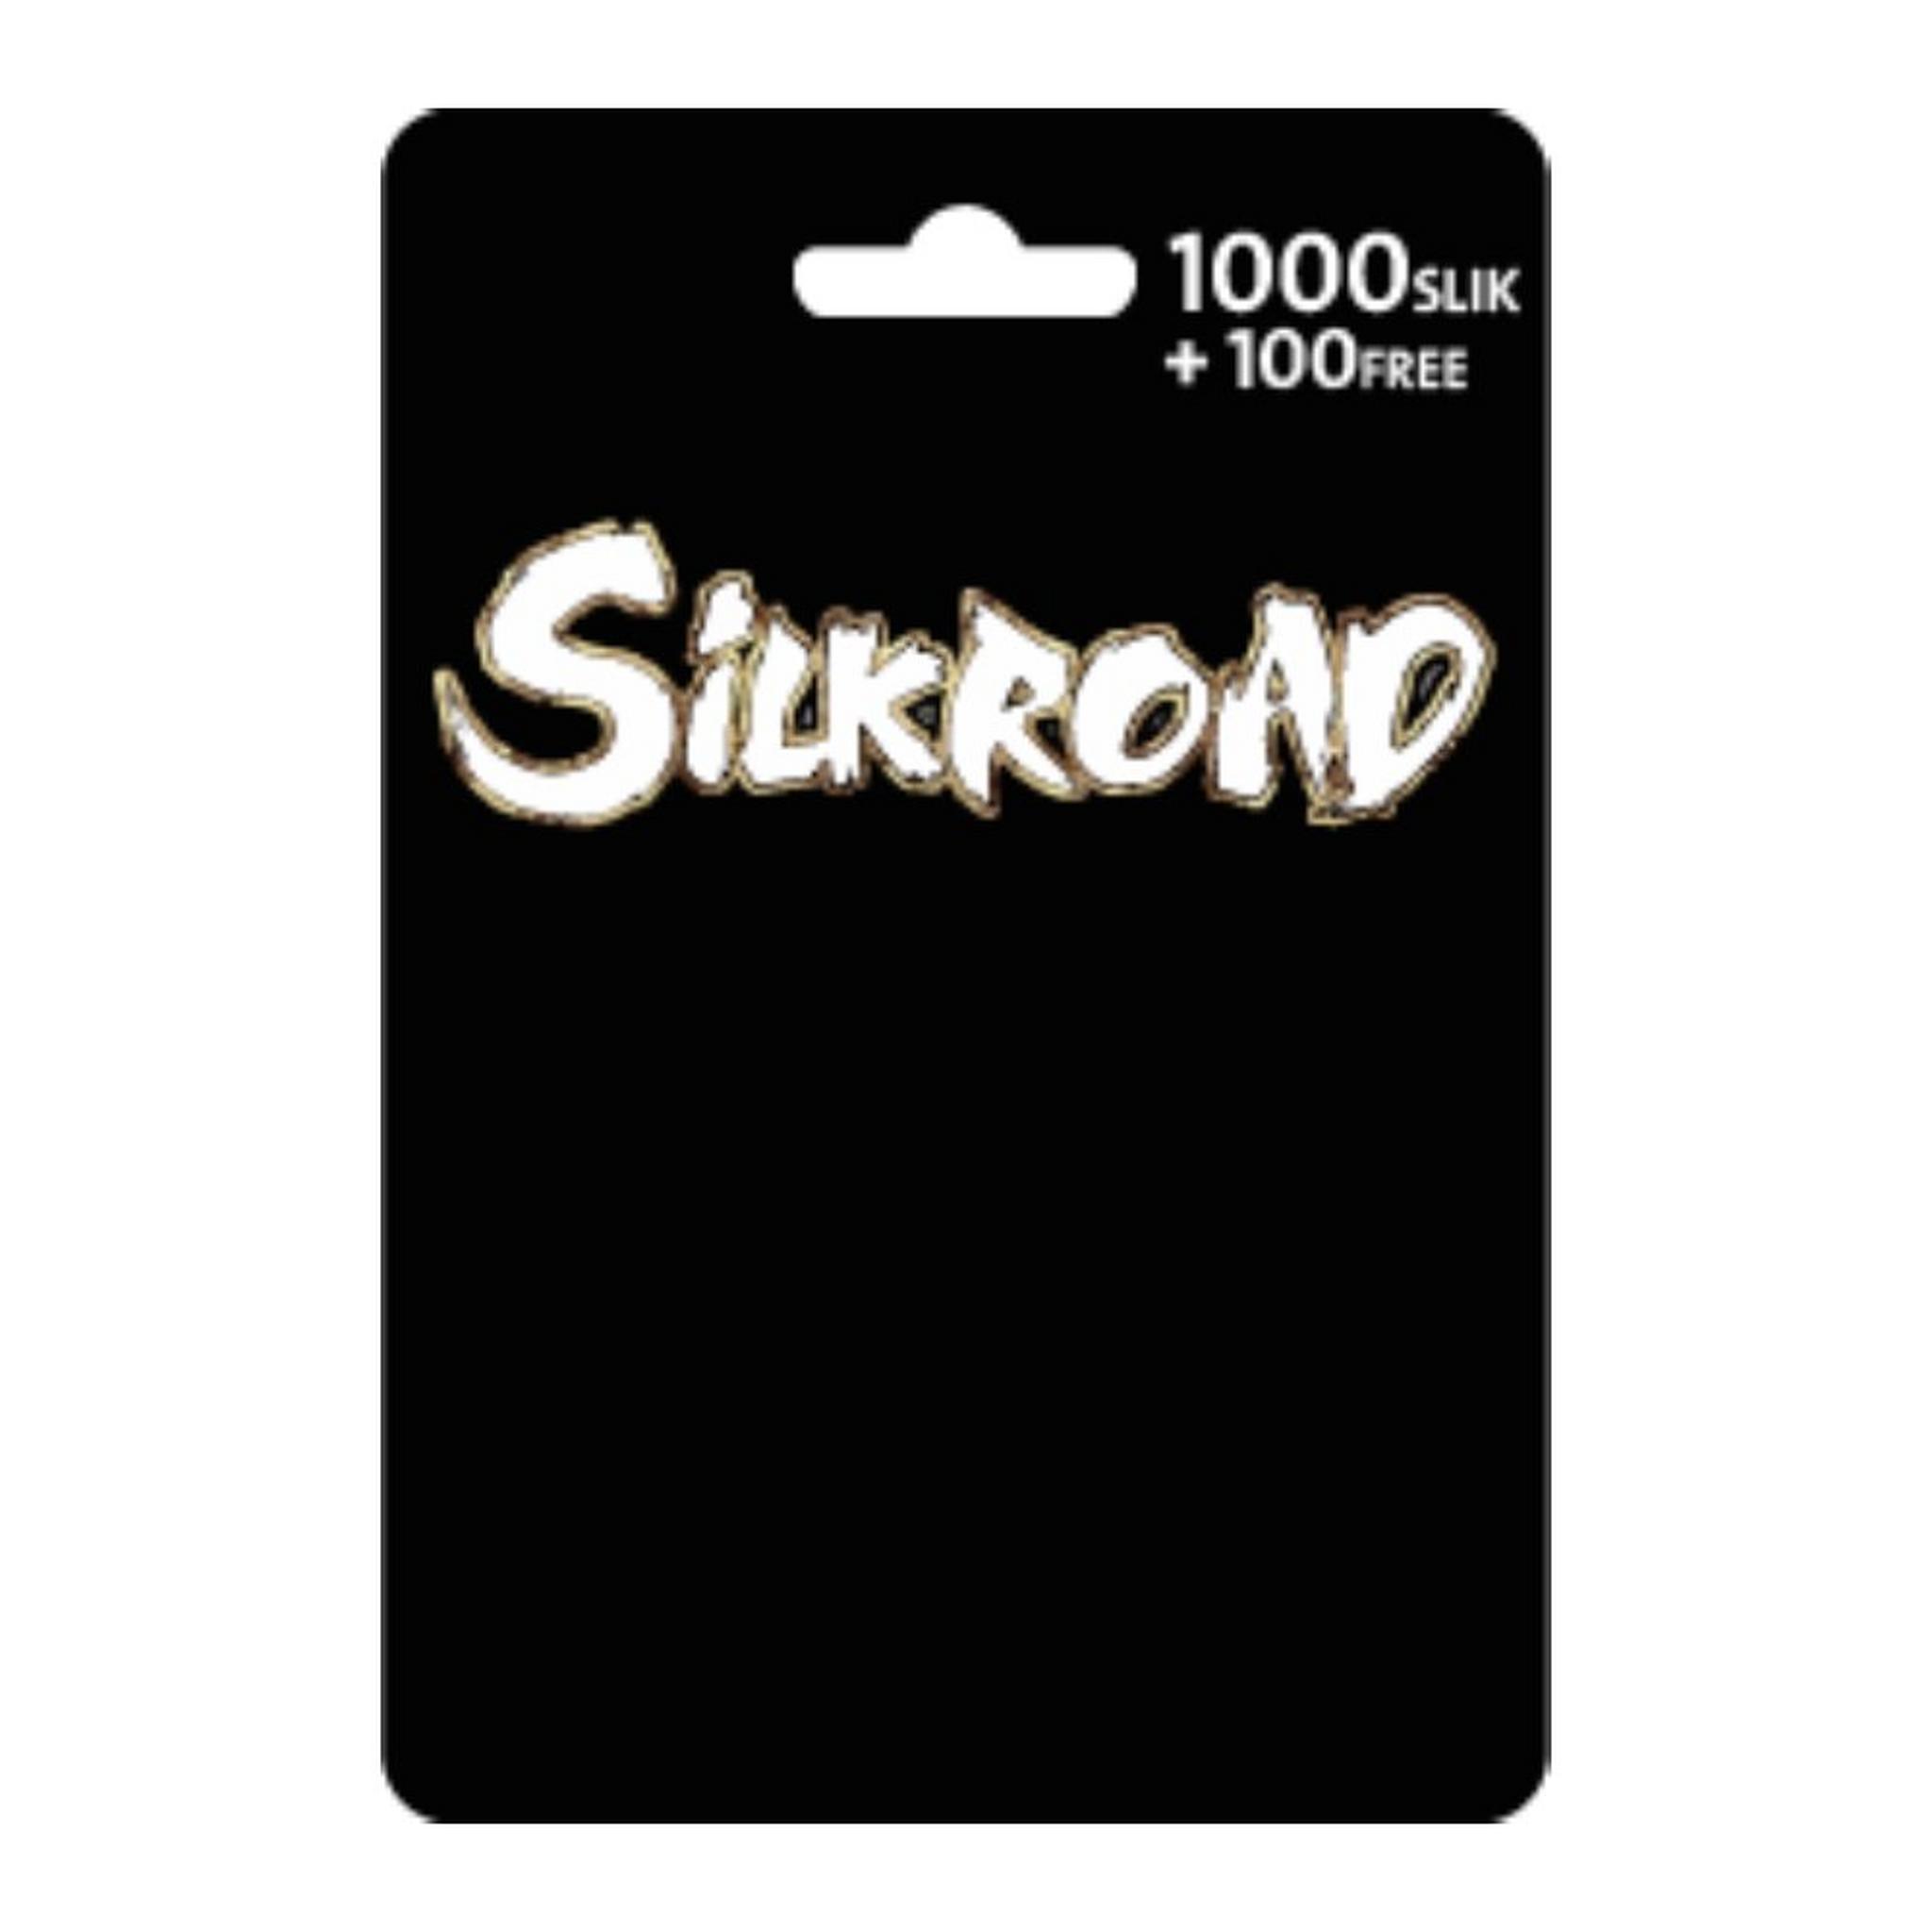 Silkroad Game Card -1000 Silk +100 Silk Free